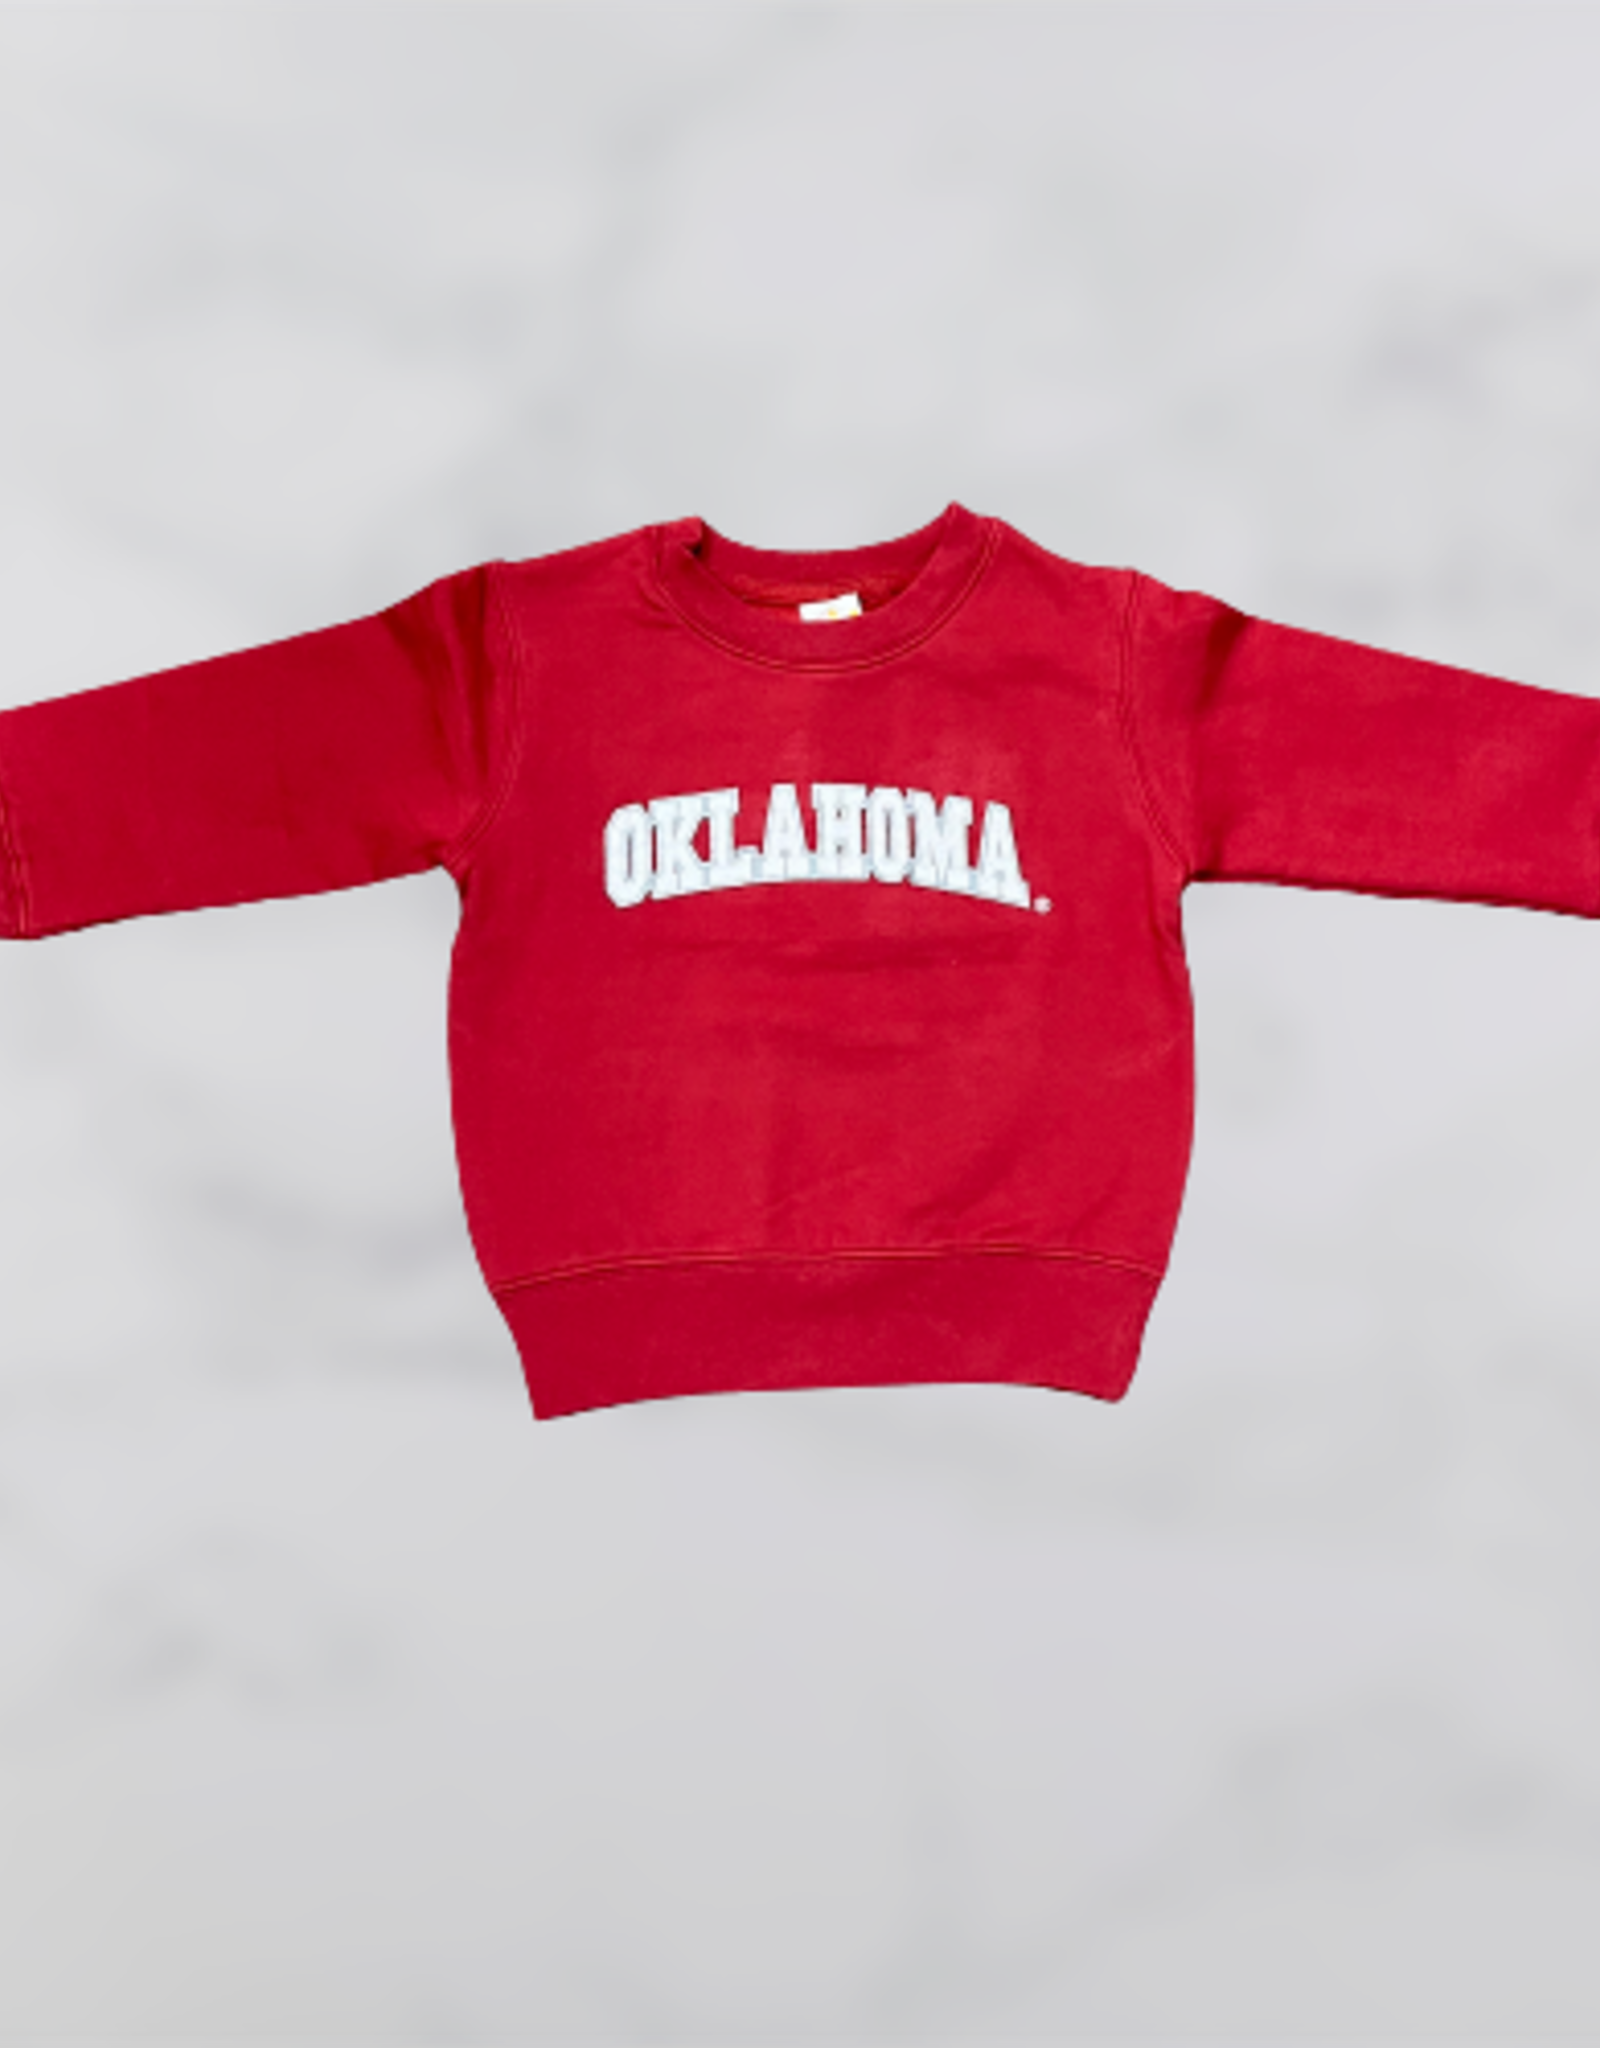 Little King Toddler OKLAHOMA Applique Sweatshirt